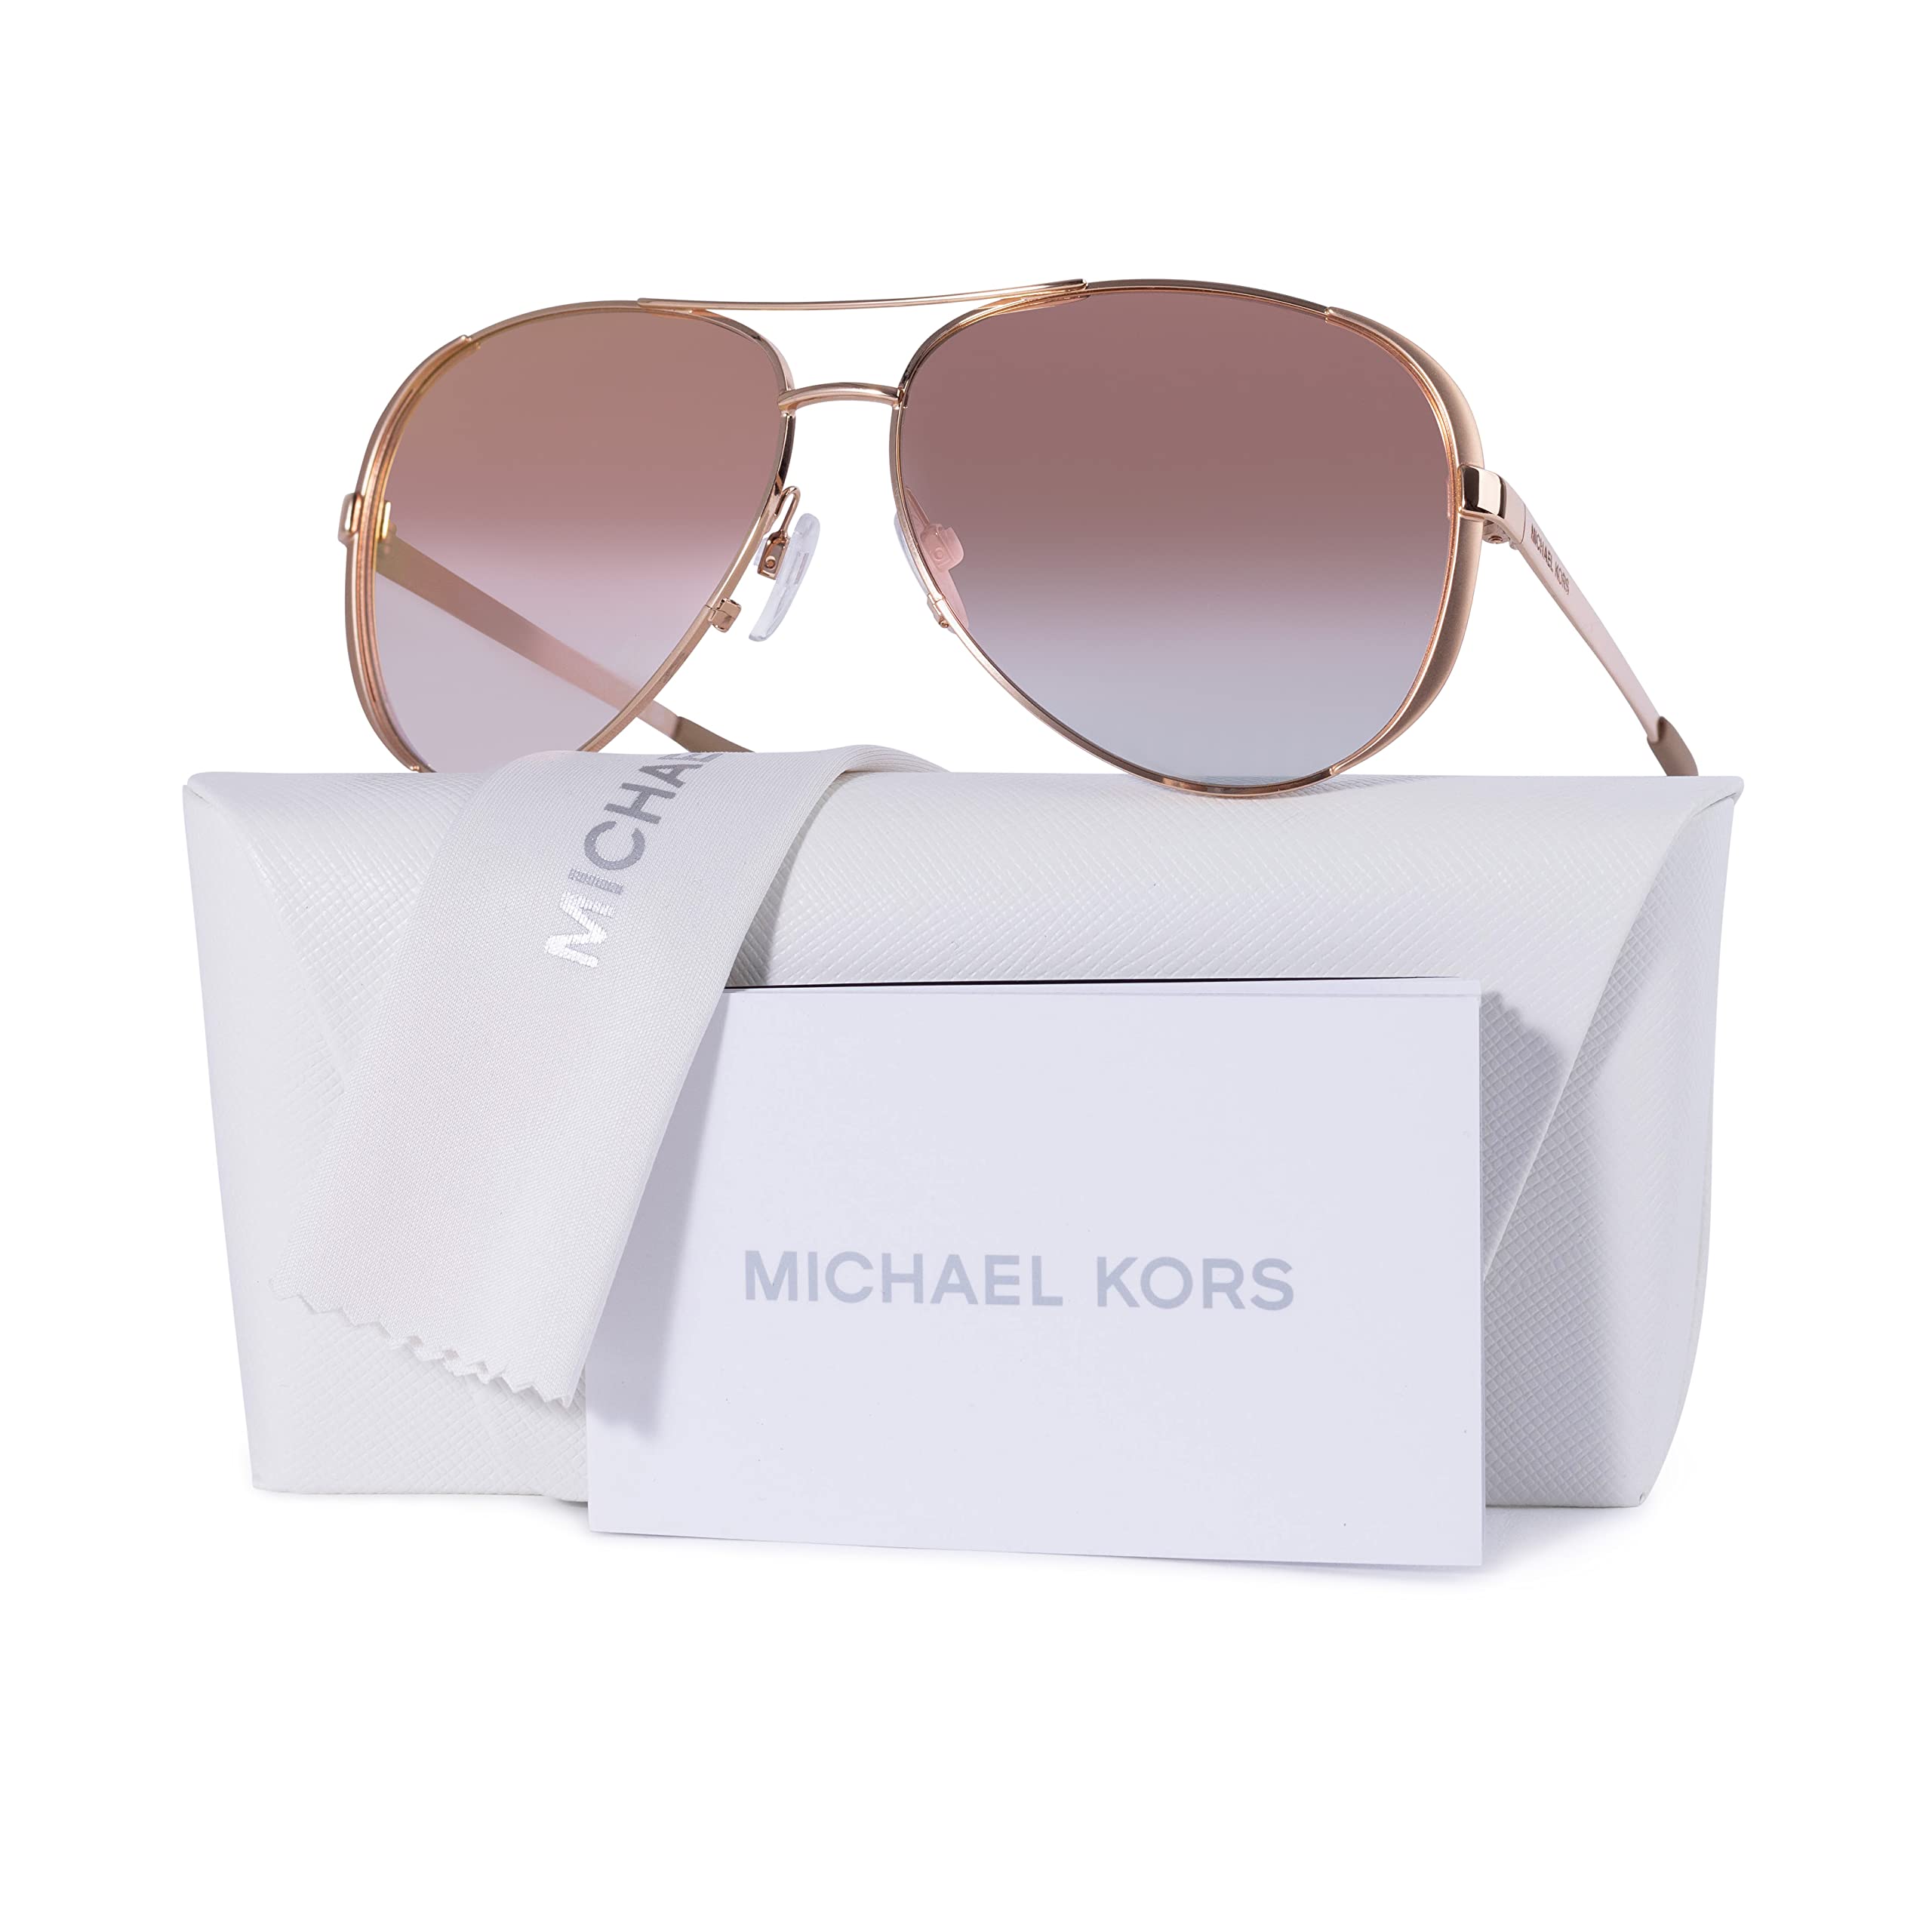 Michael Kors Glasses  Michael Kors Prescription Glasses  Fashion Eyewear